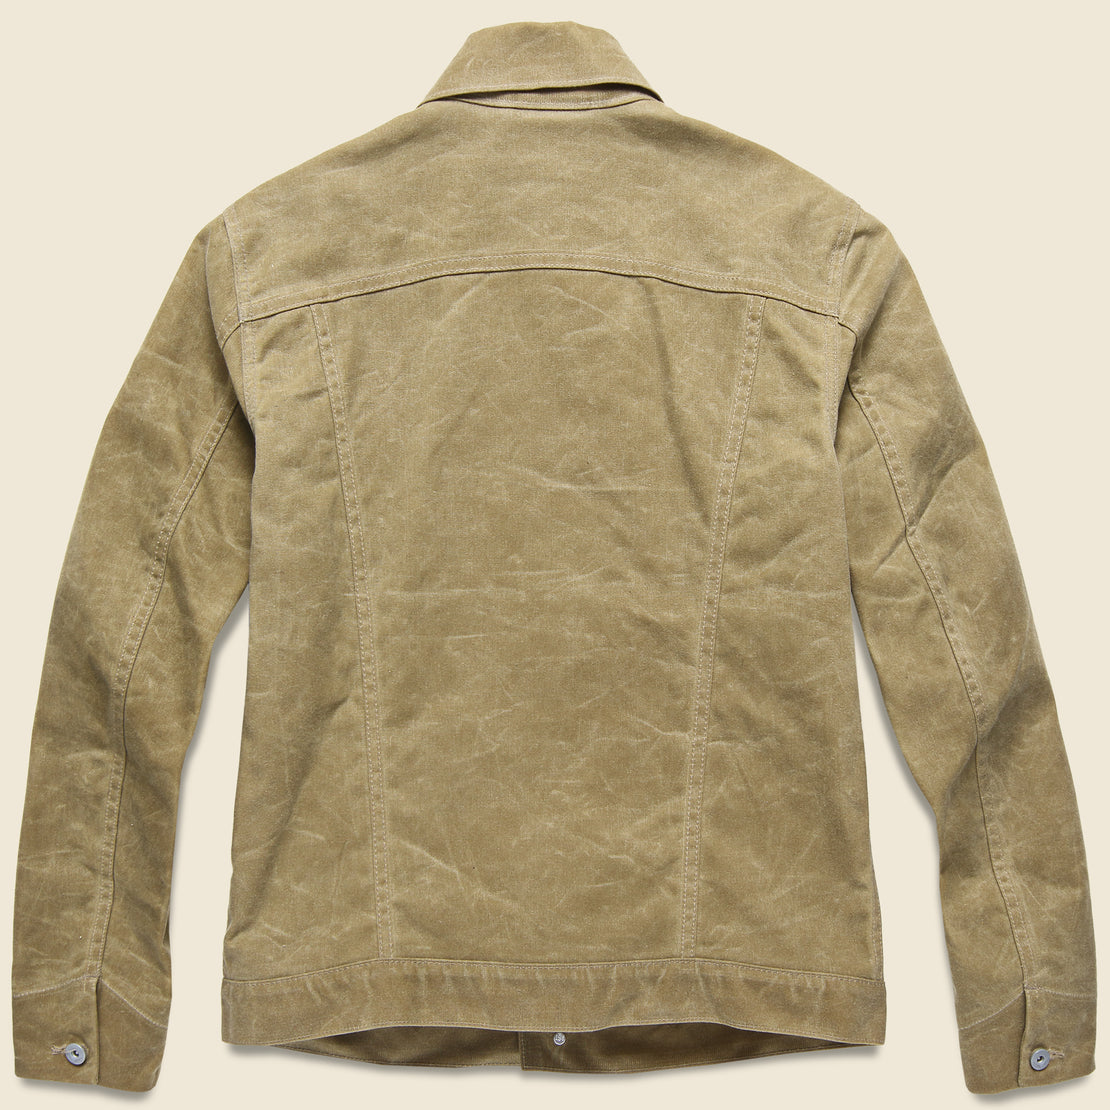 Supply Jacket - Blanket Lined Waxed Tan Ridgeline